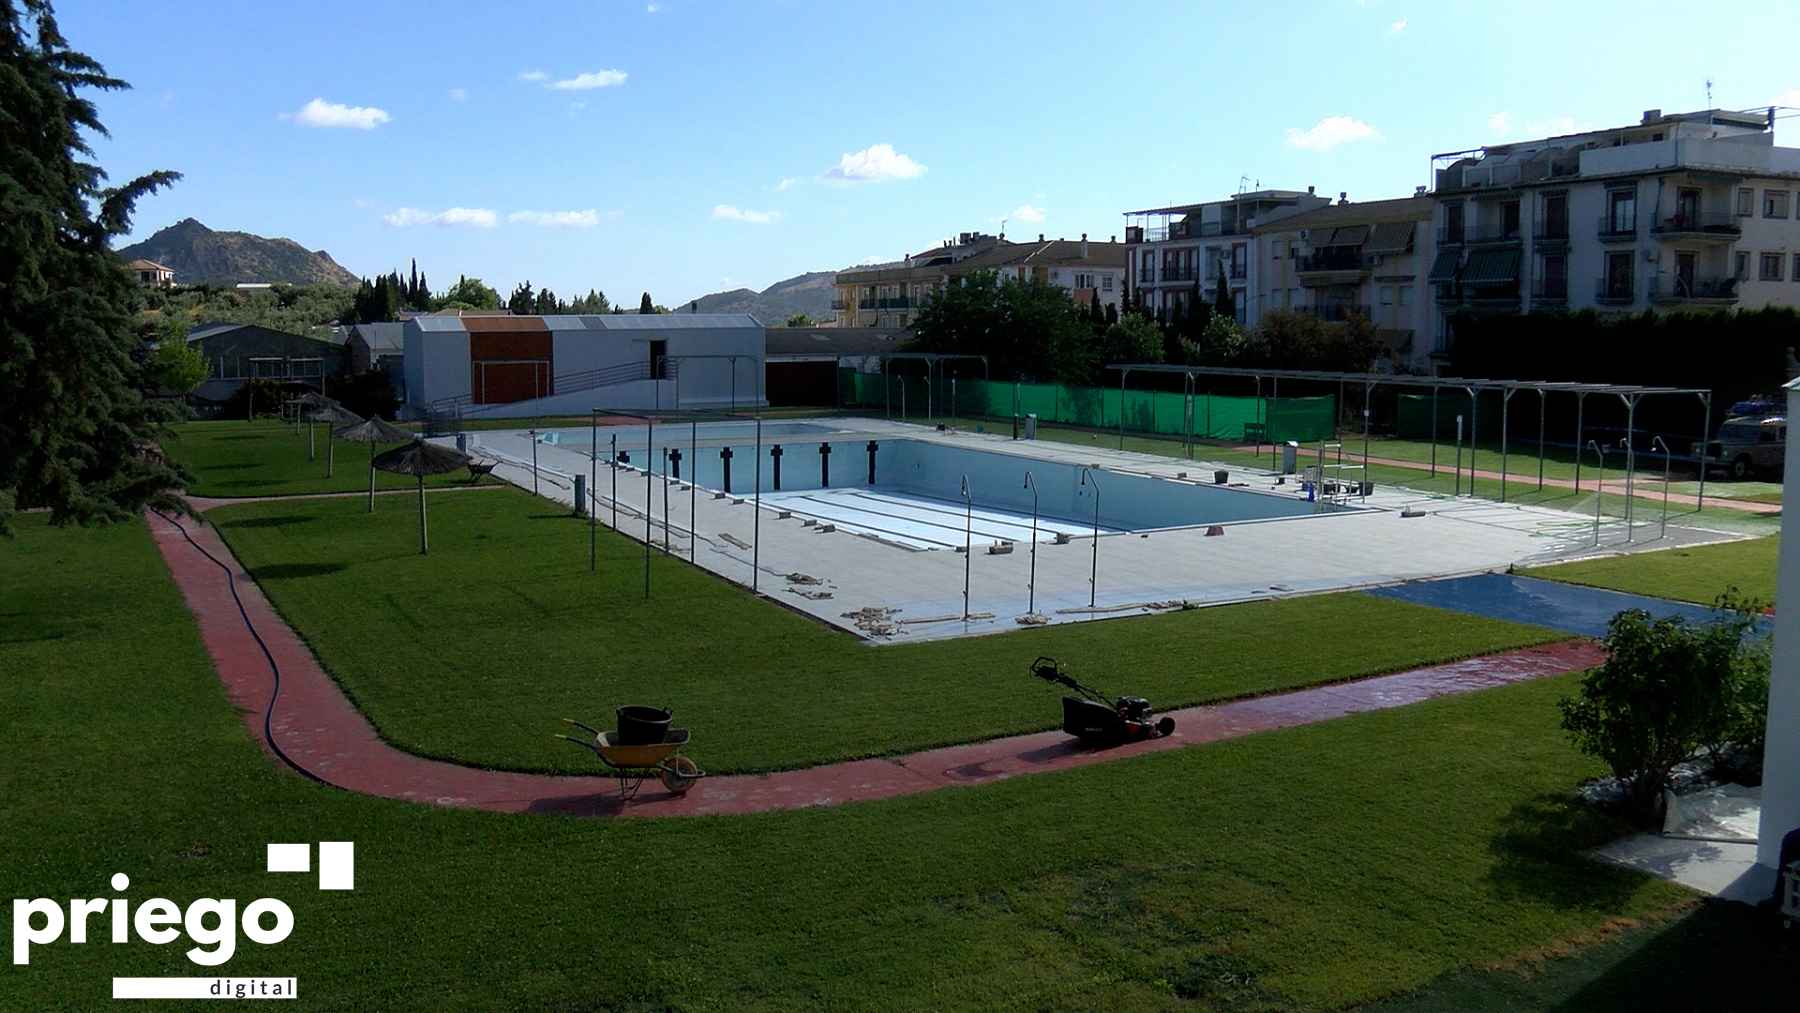 Aspecto actual de la piscina municipal de Priego.